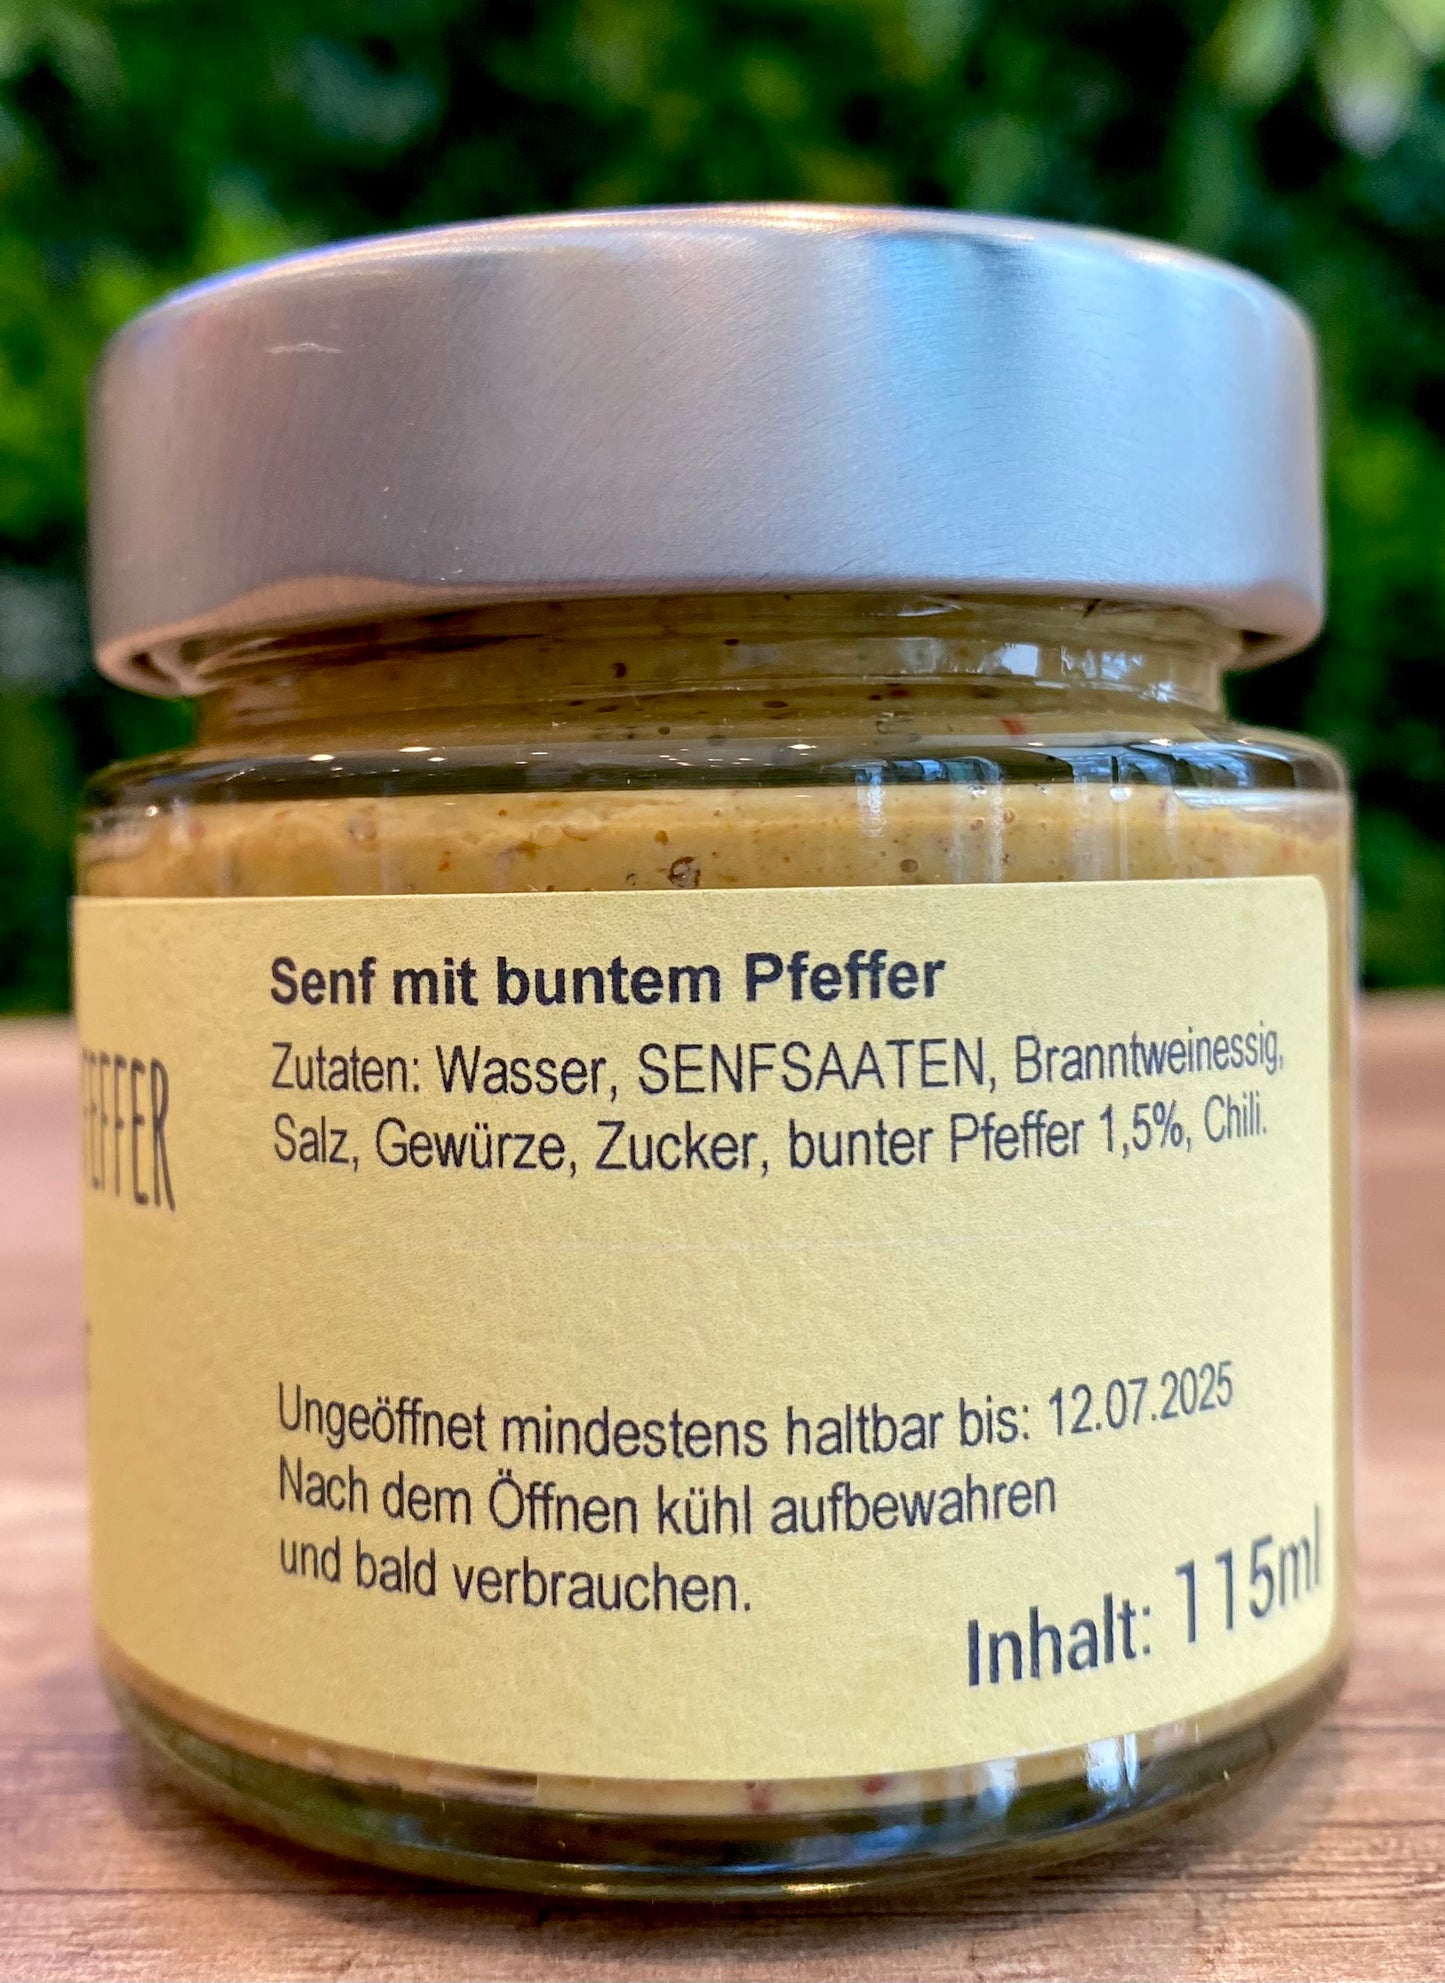 Bunter Pfeffer Senf